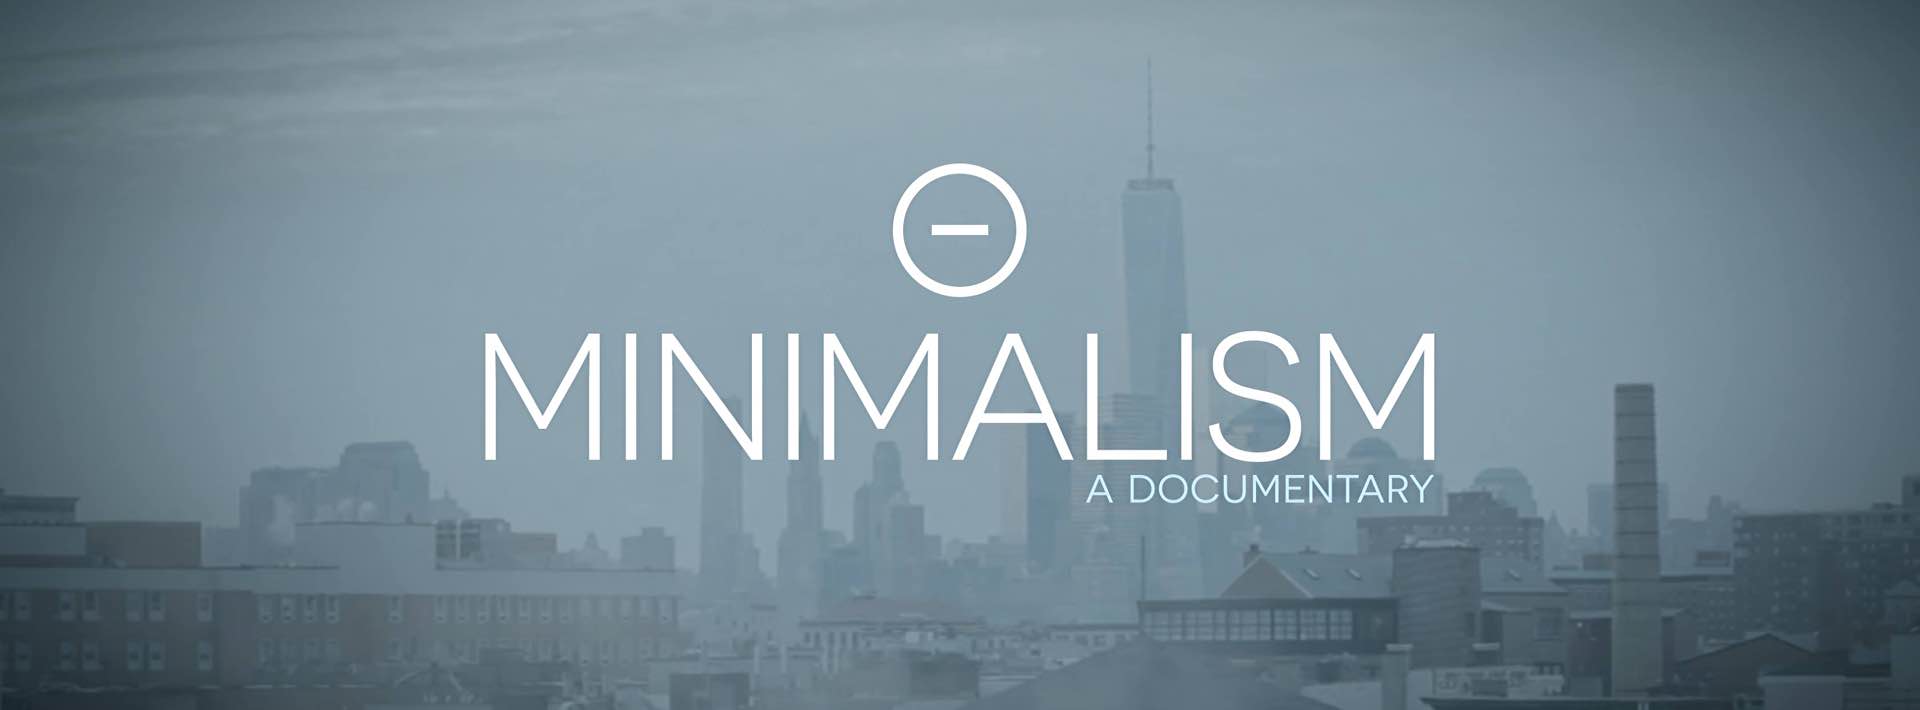 minimalism-documentary